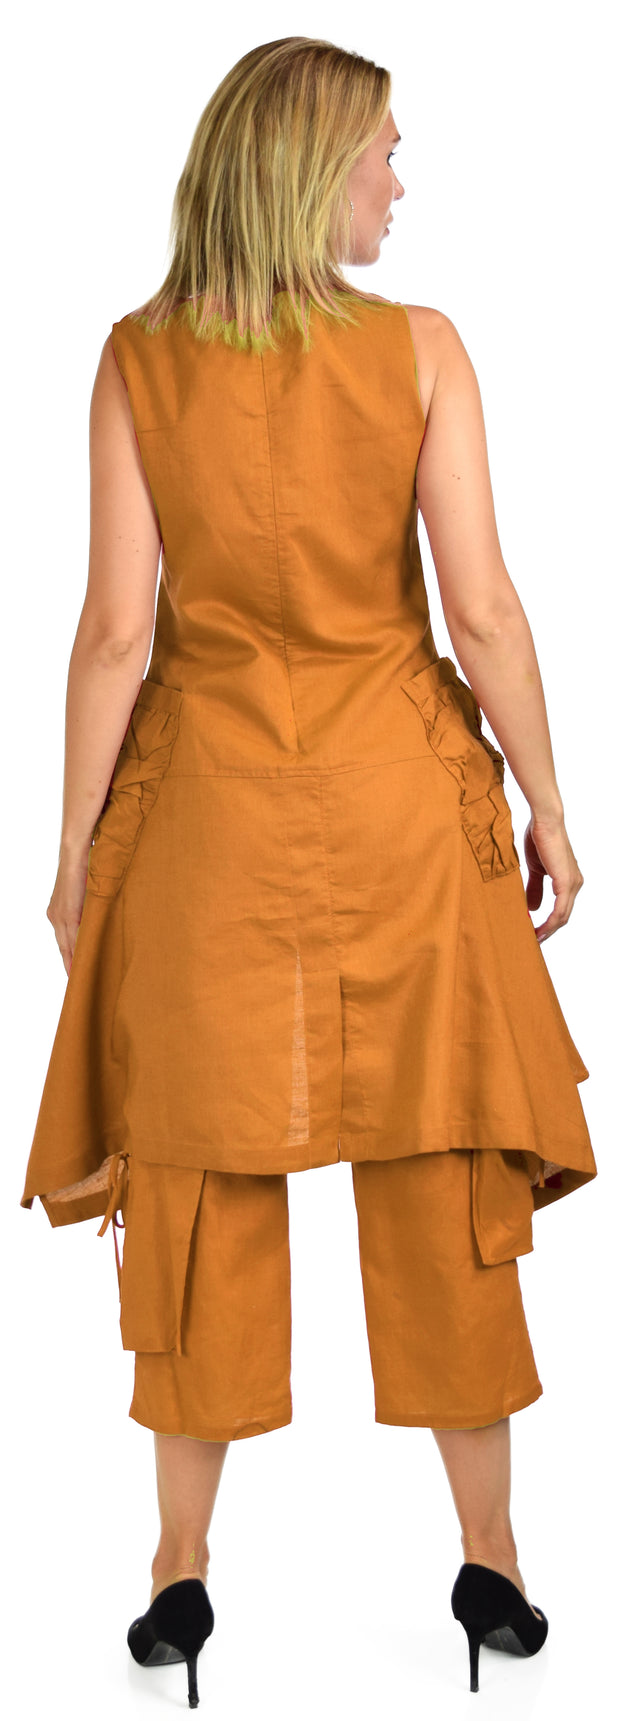 Women's 2 Piece Linen Summer Pants and Sleeveless Top Set, Regular and Plus Sizes